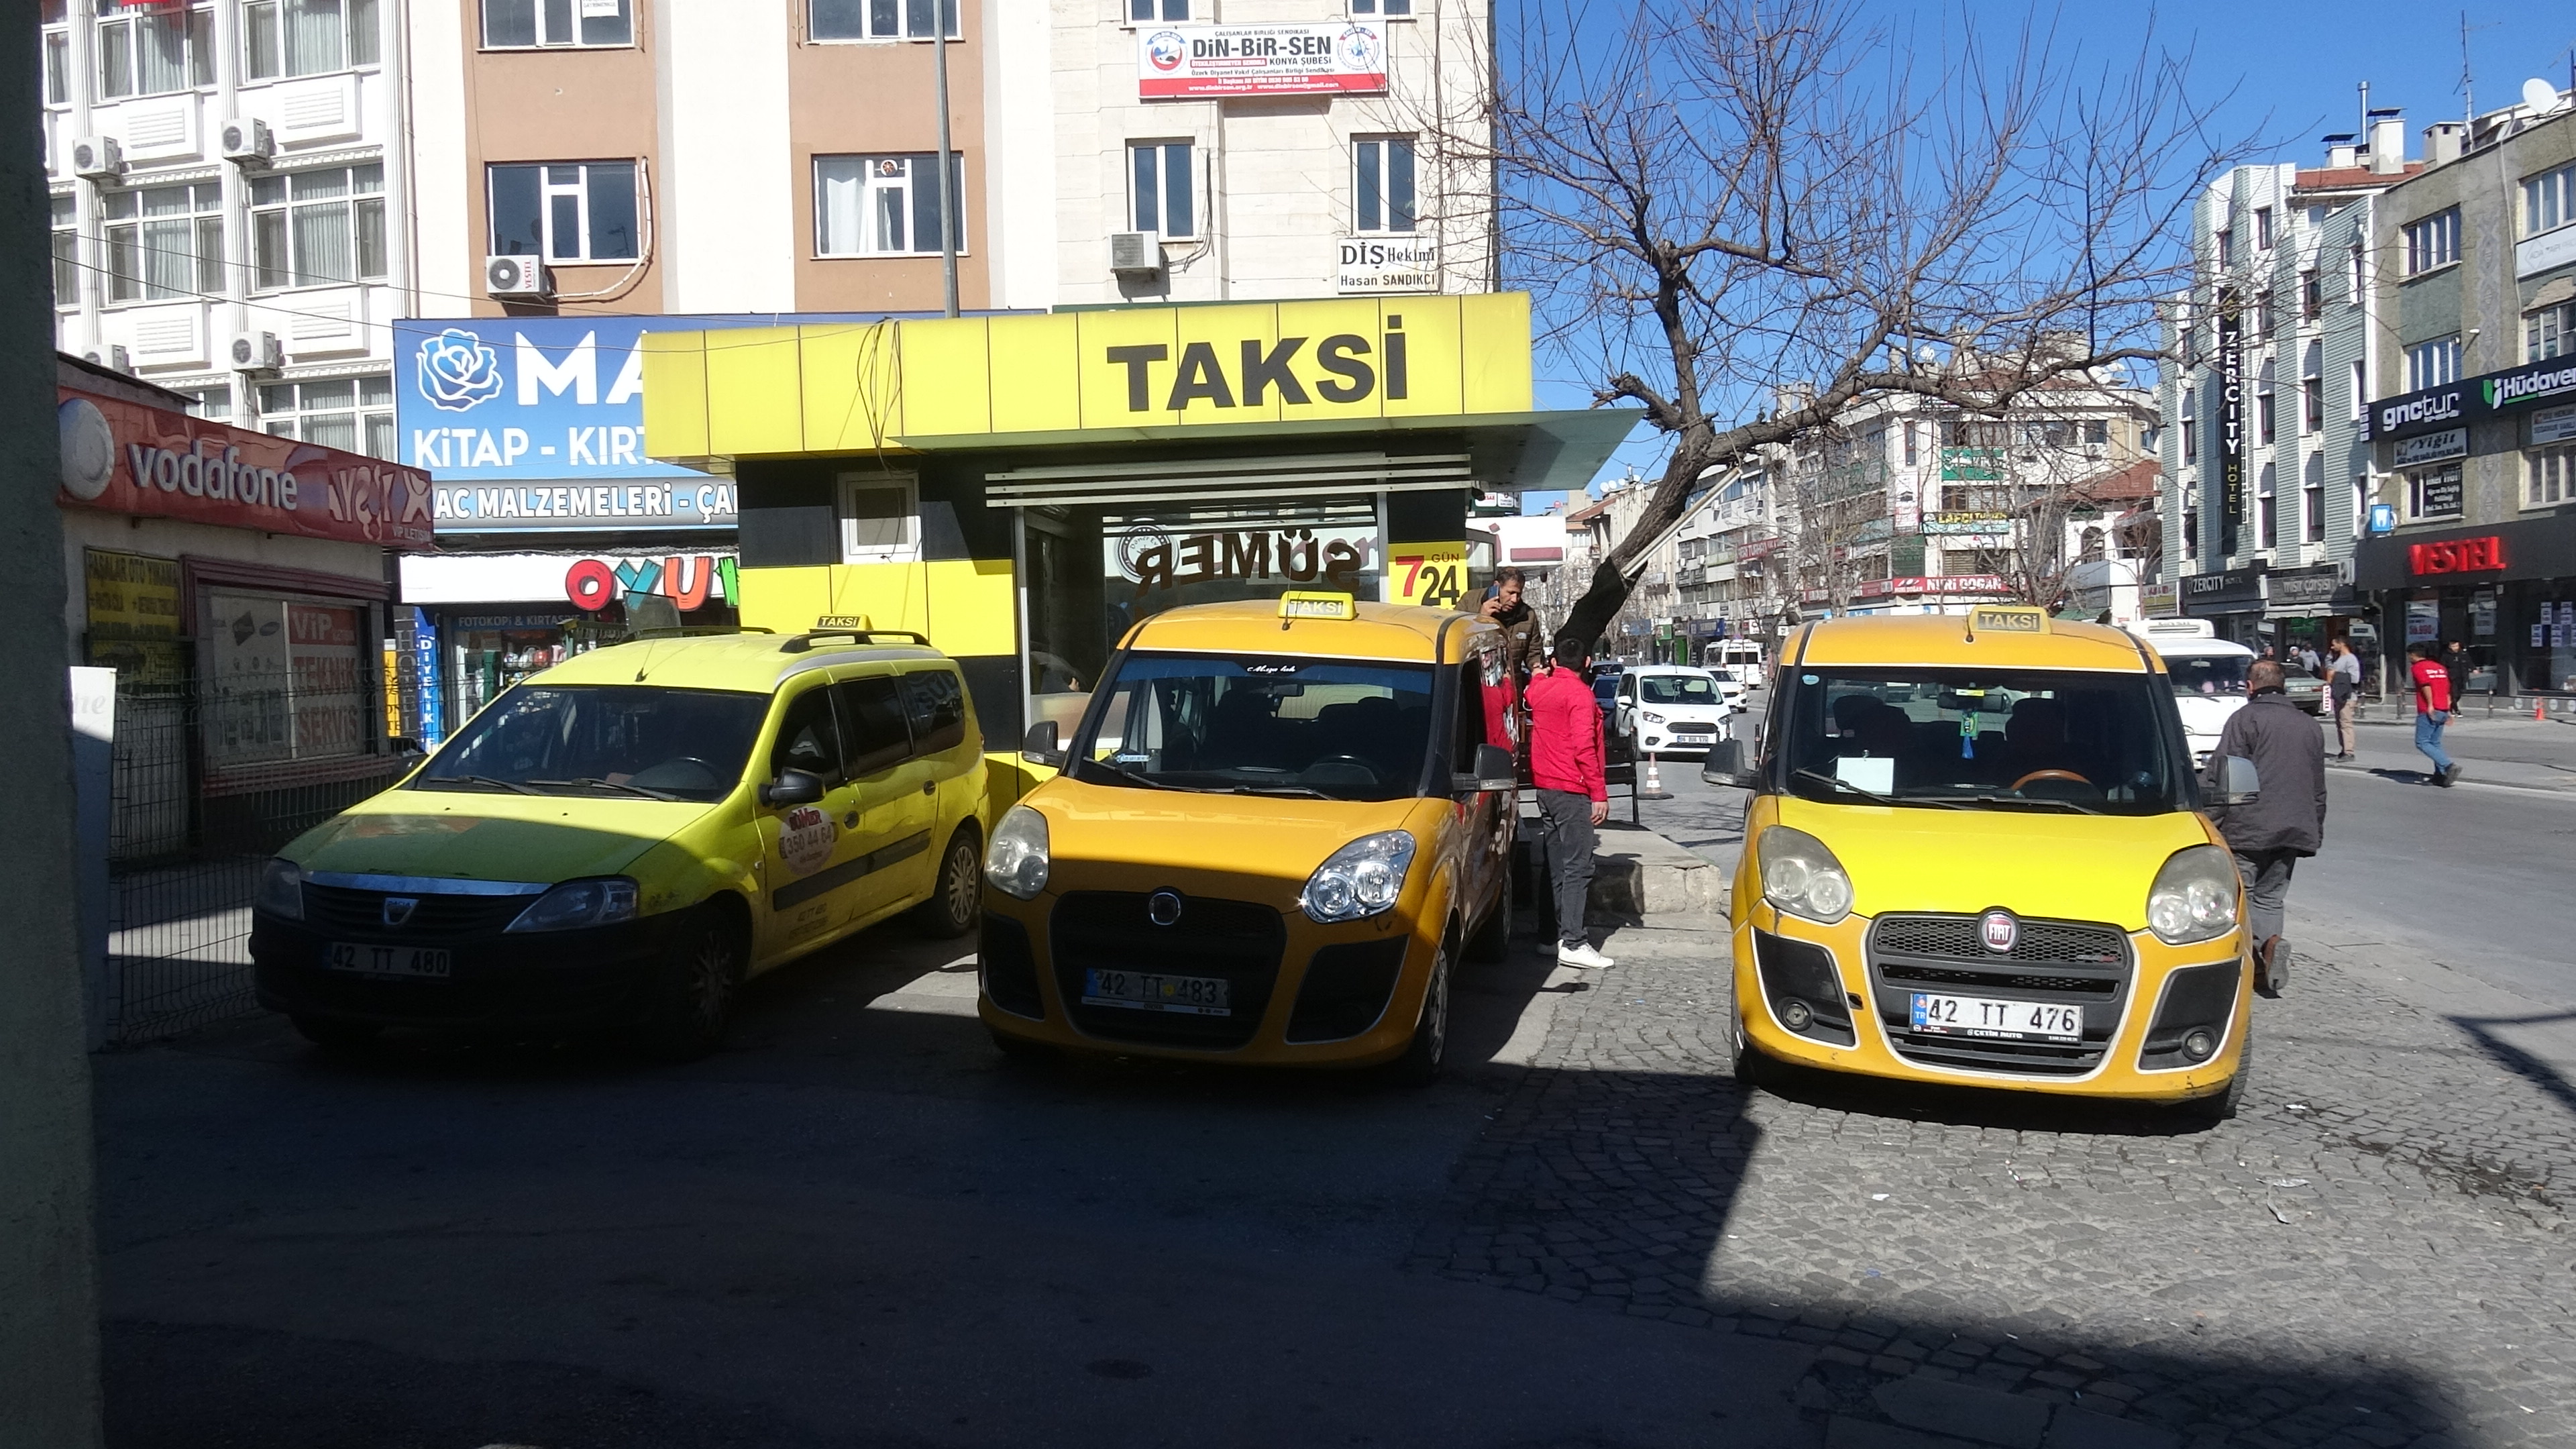 taksi-soforu-musterisi-tarafindan-bicaklandi-yenicag7.jpg